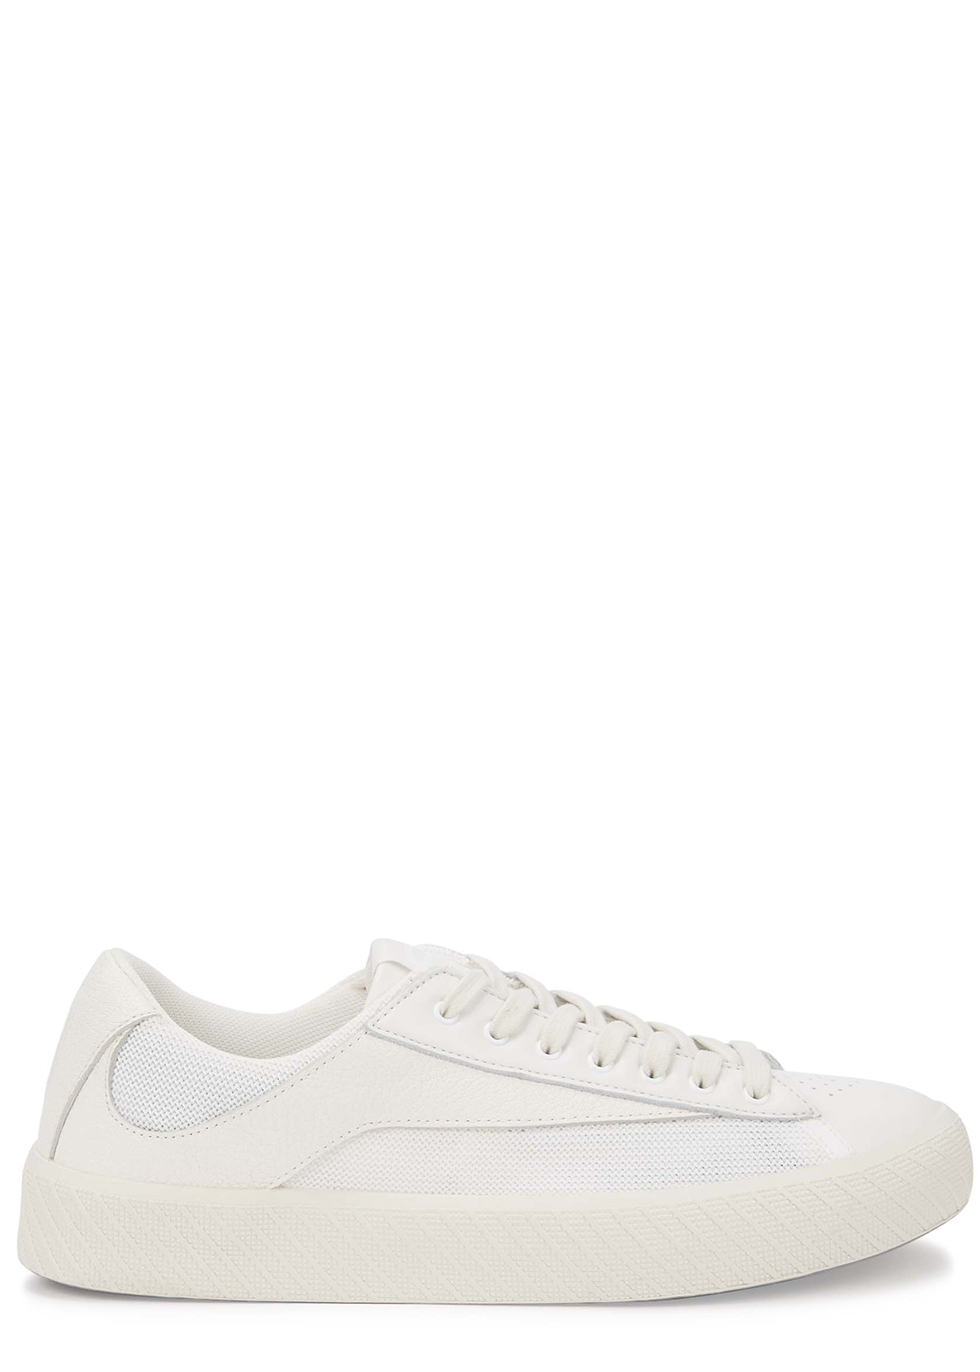 Rodina white leather sneakers